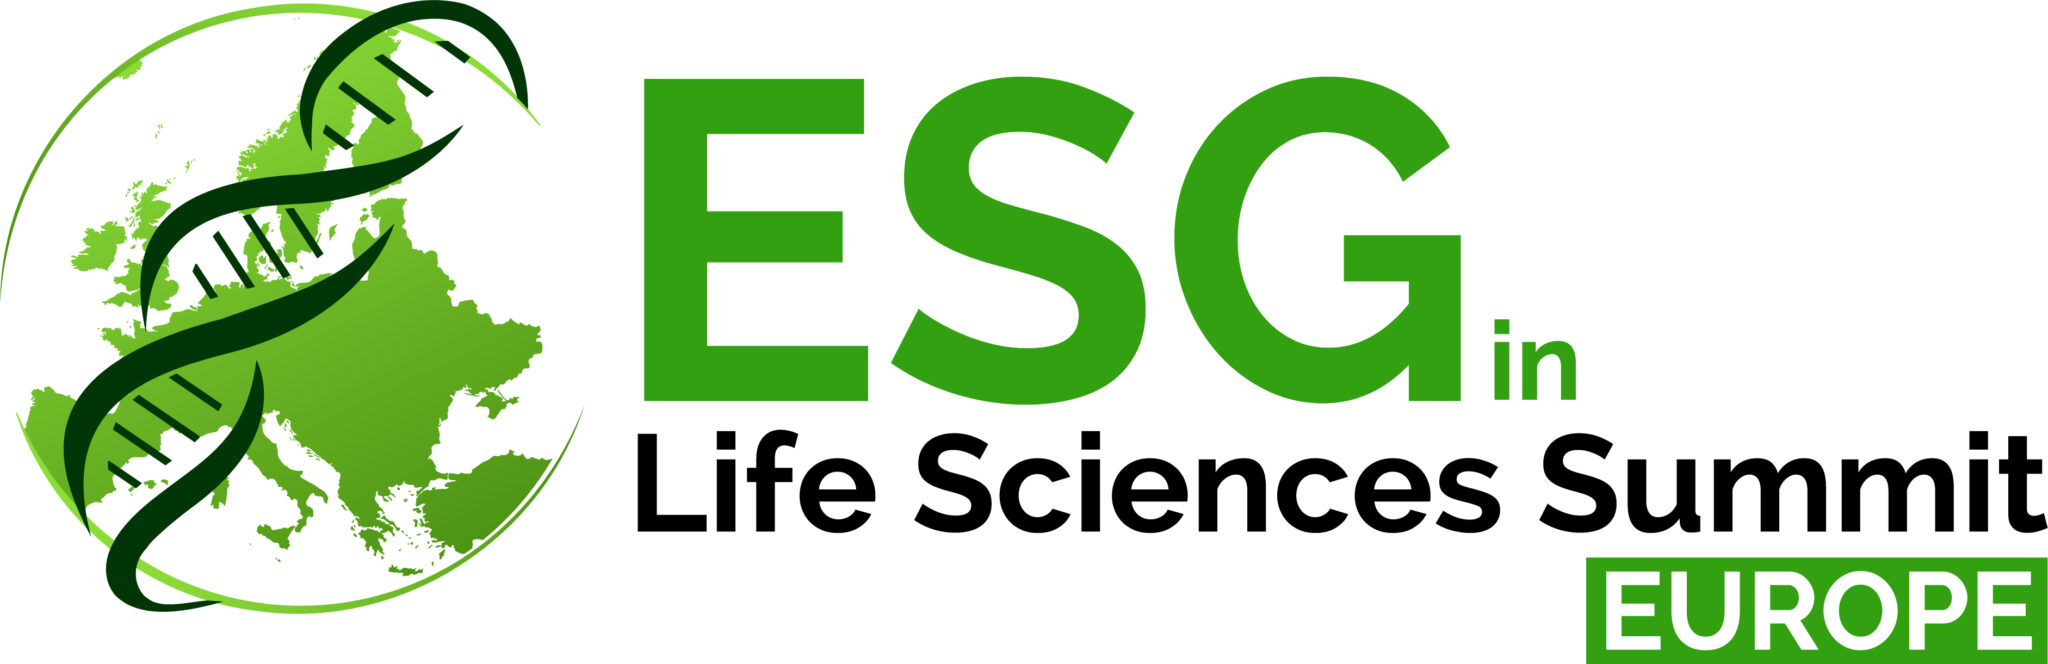 ESG Life Sciences Europe